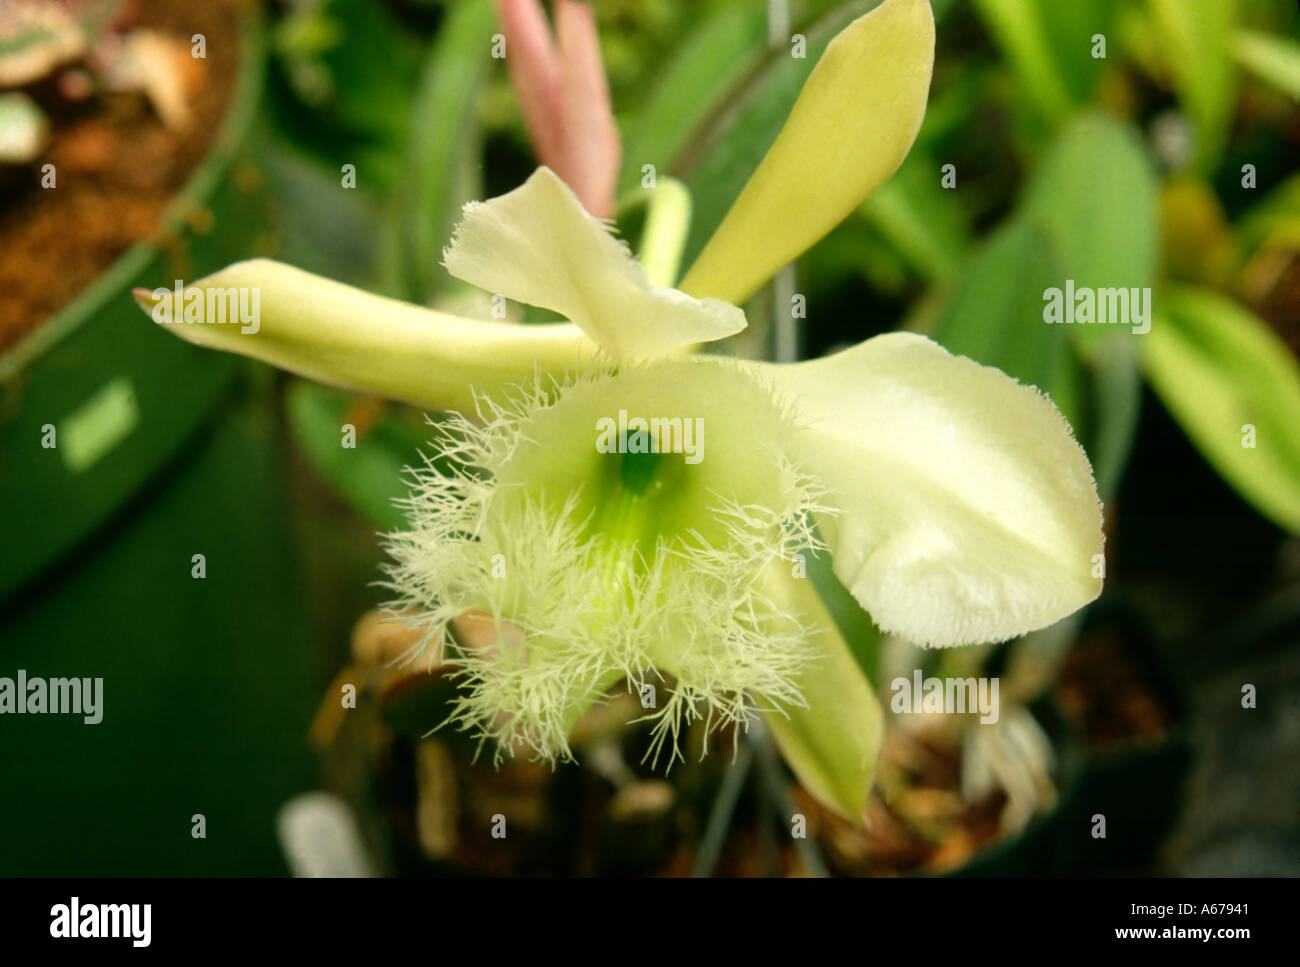 Orchid Brassavola digbyana Stock Photo - Alamy